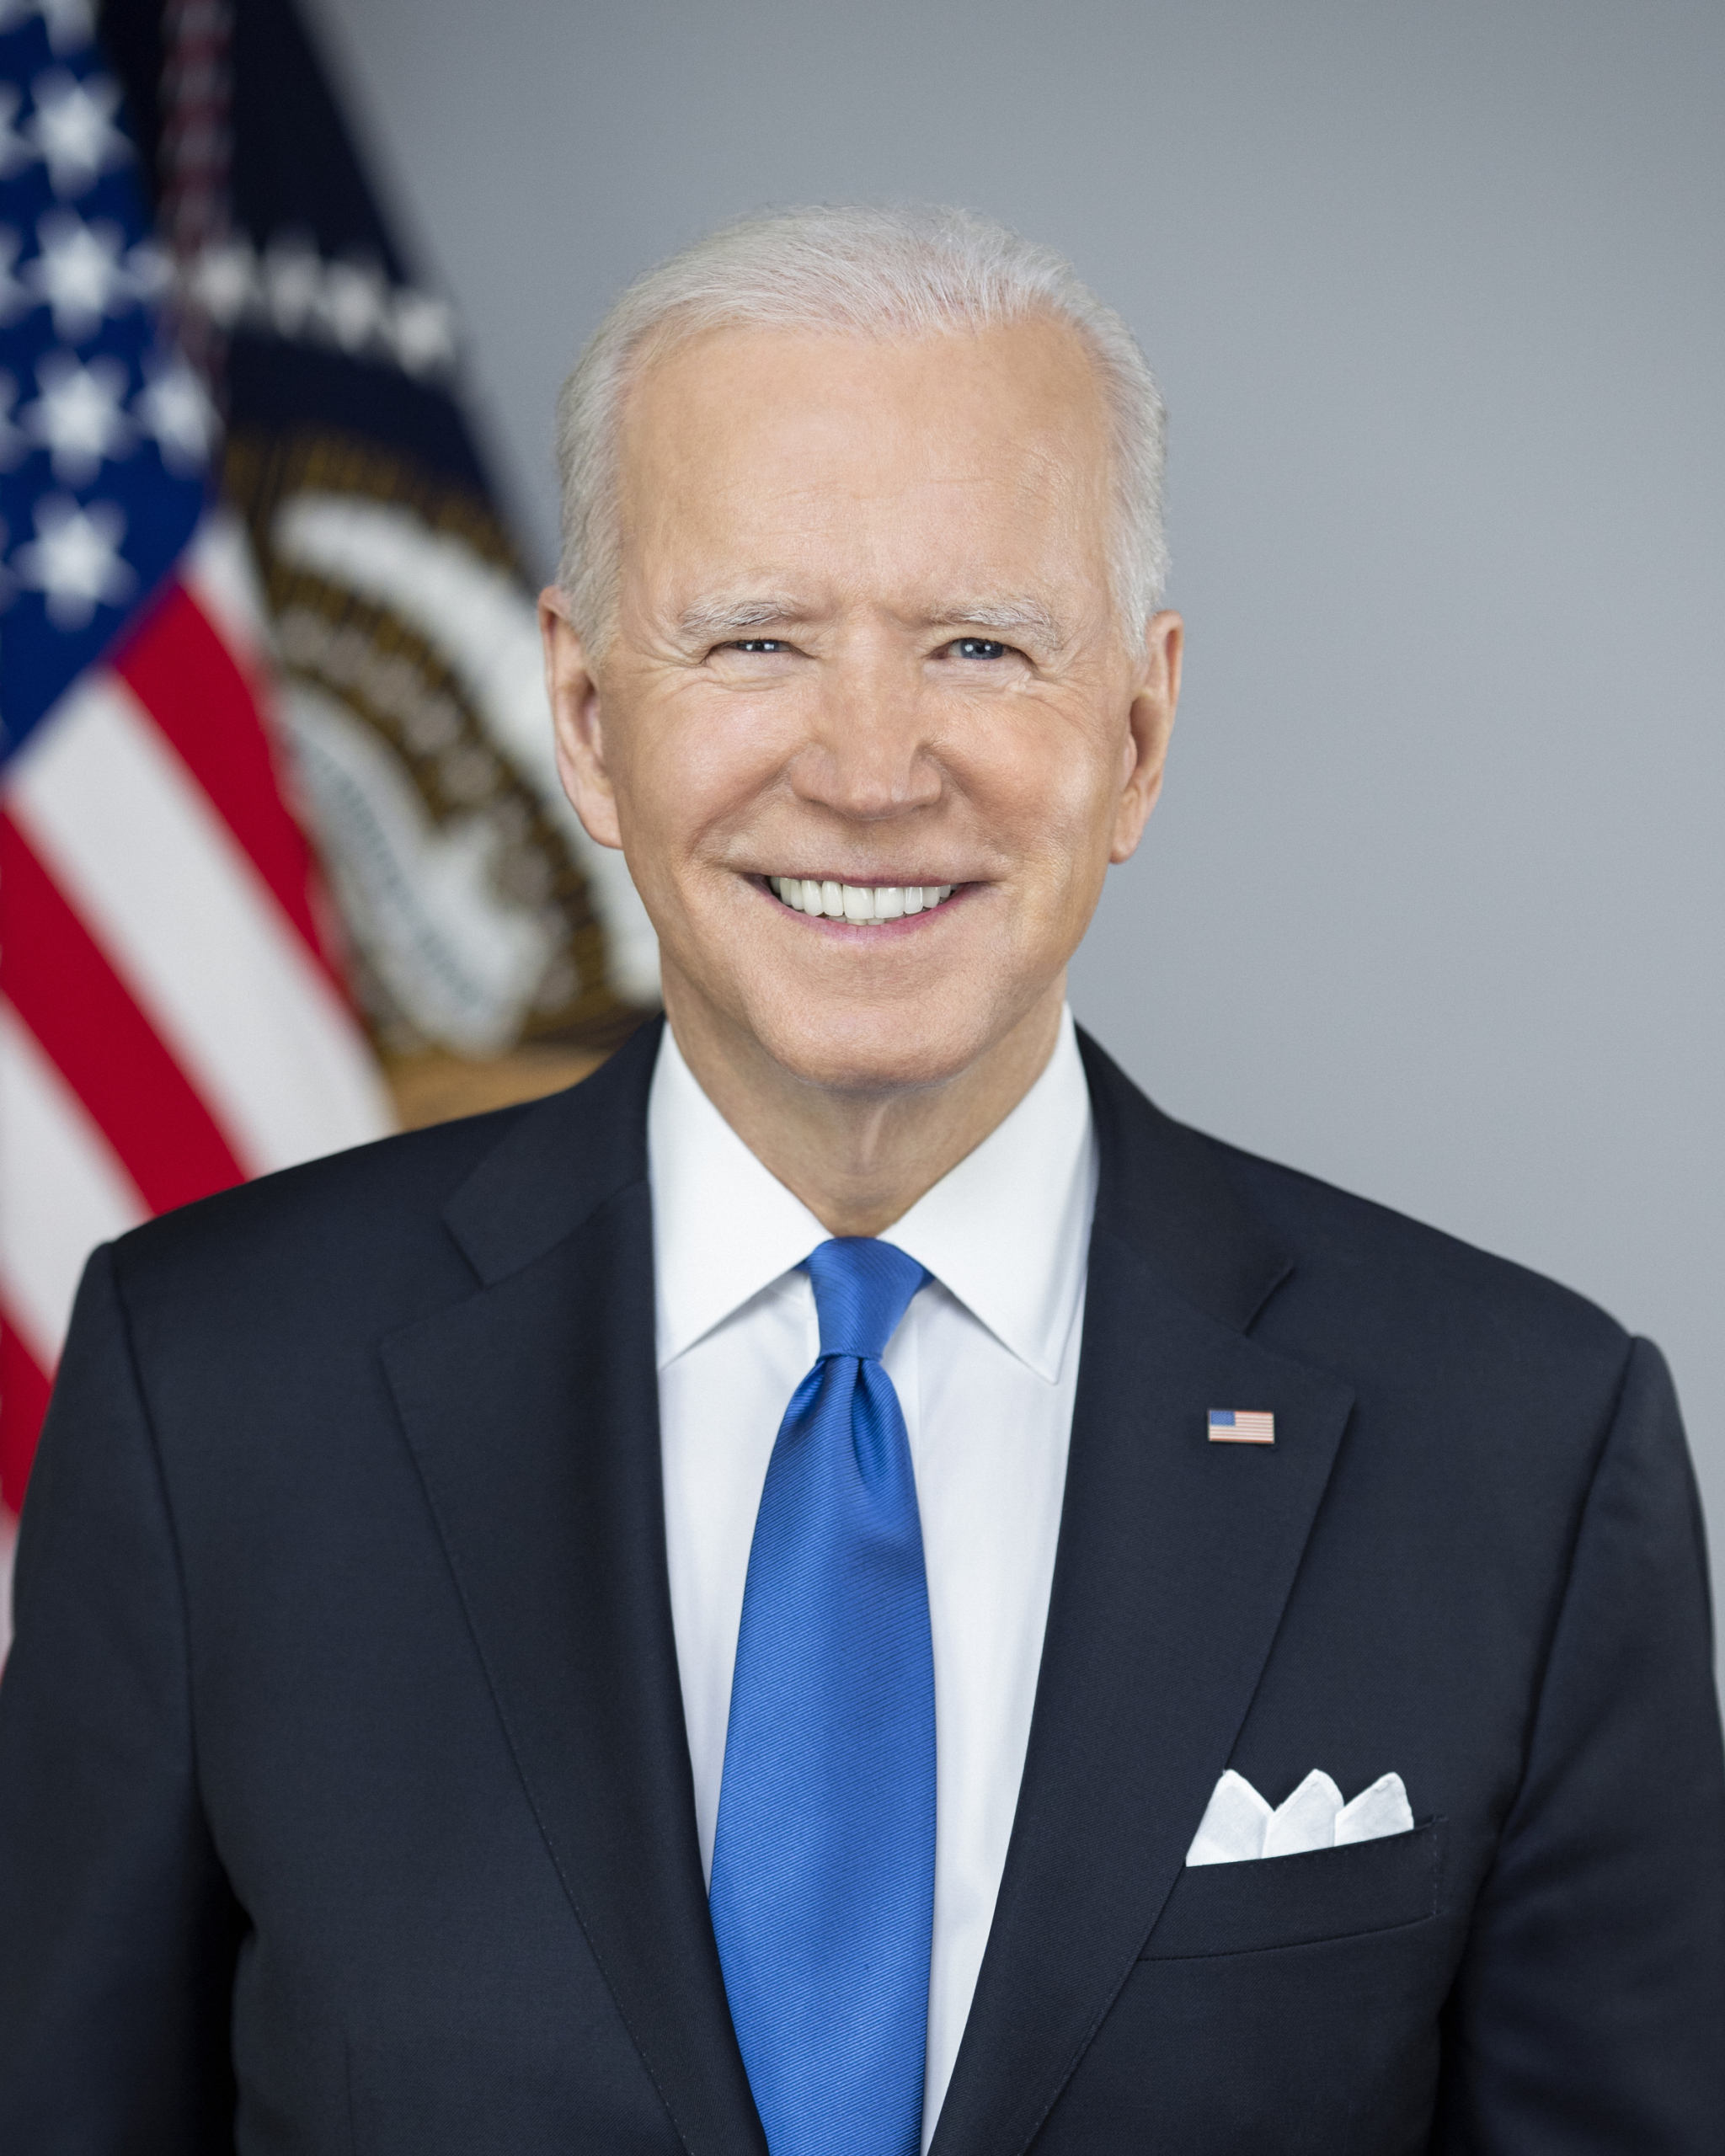 President Biden Believes ‘Bidenomics’ Will Deter Any Recession For US Economy